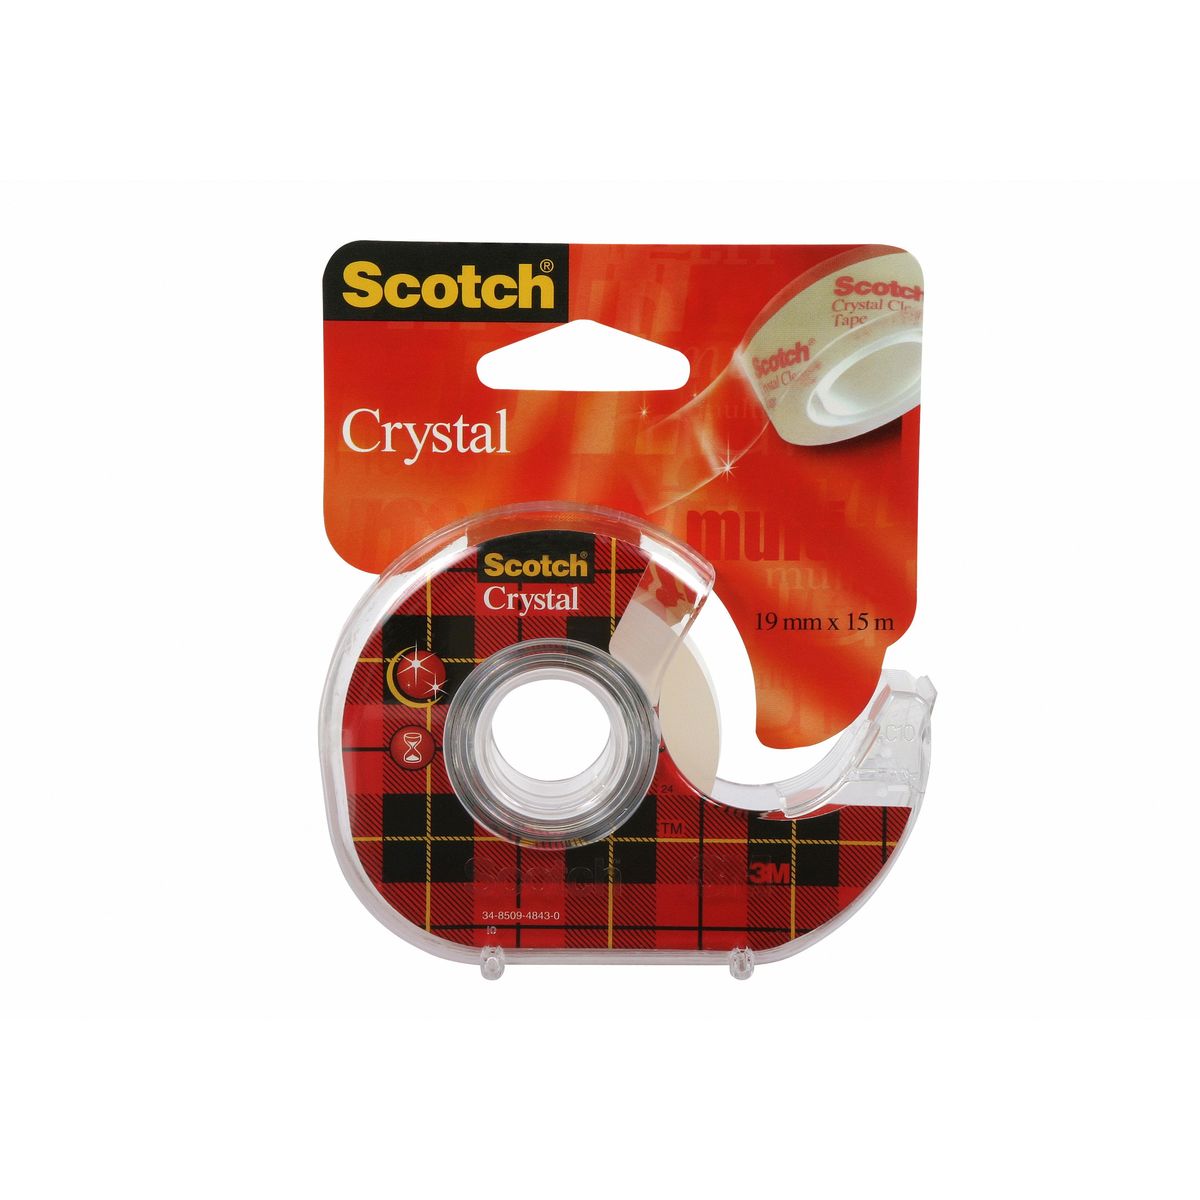 Scotch Crystal Ruban Adhésif avec dévidoir 19mm x15m